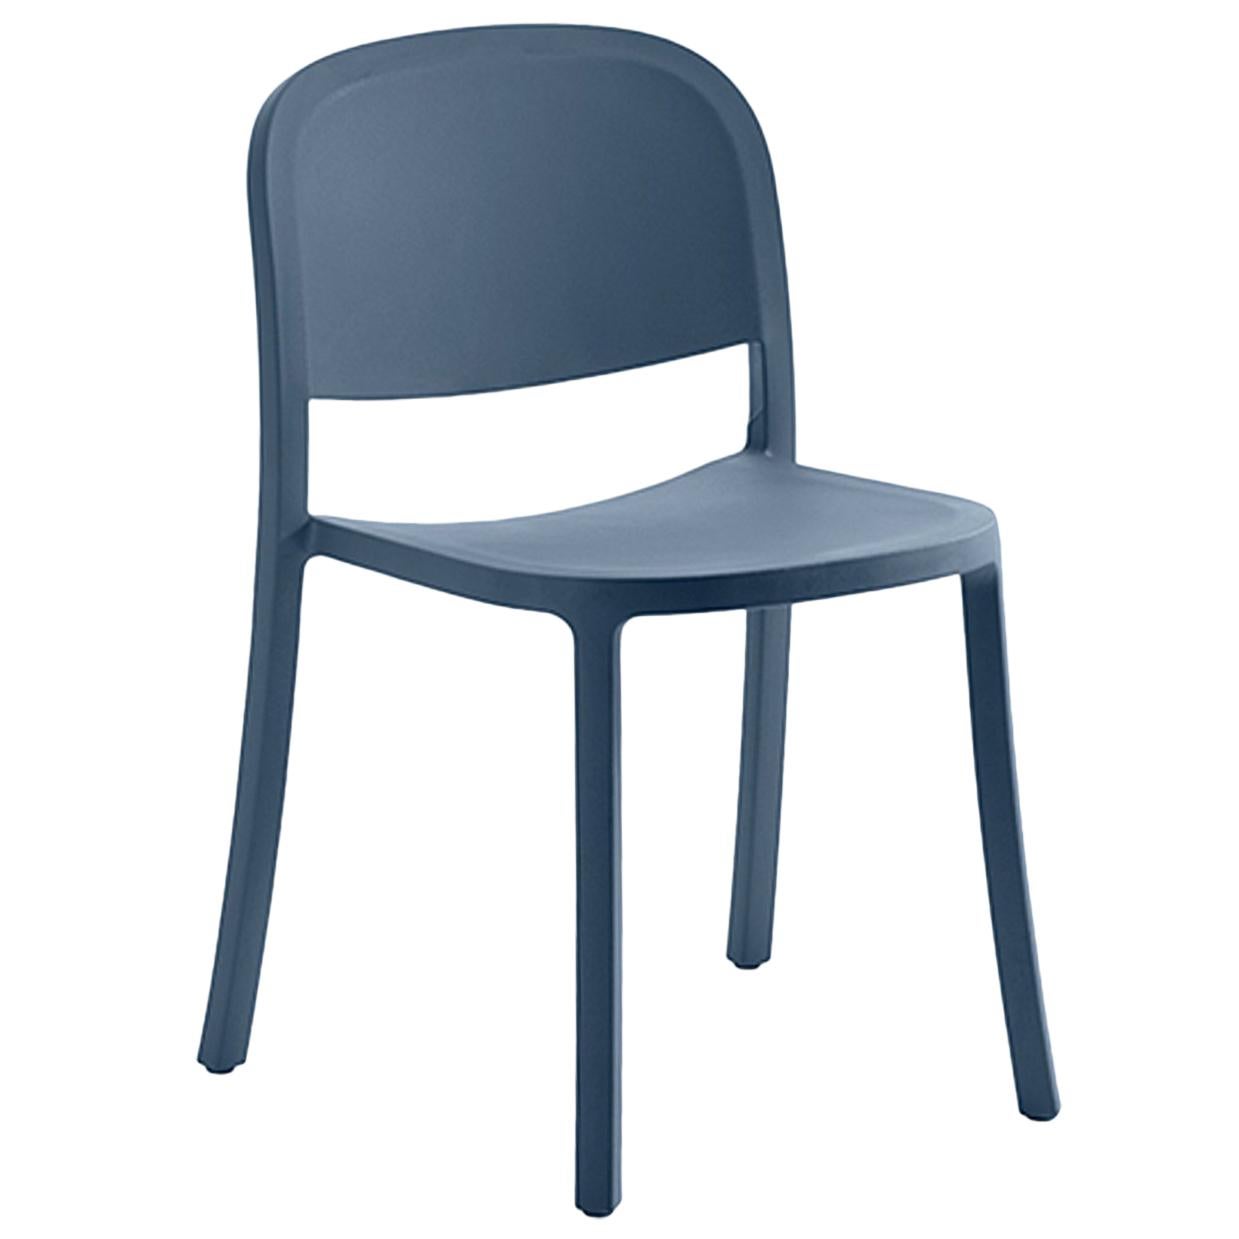 Emeco 1 Inch Reclaimed Chair in Blue by Jasper Morrison